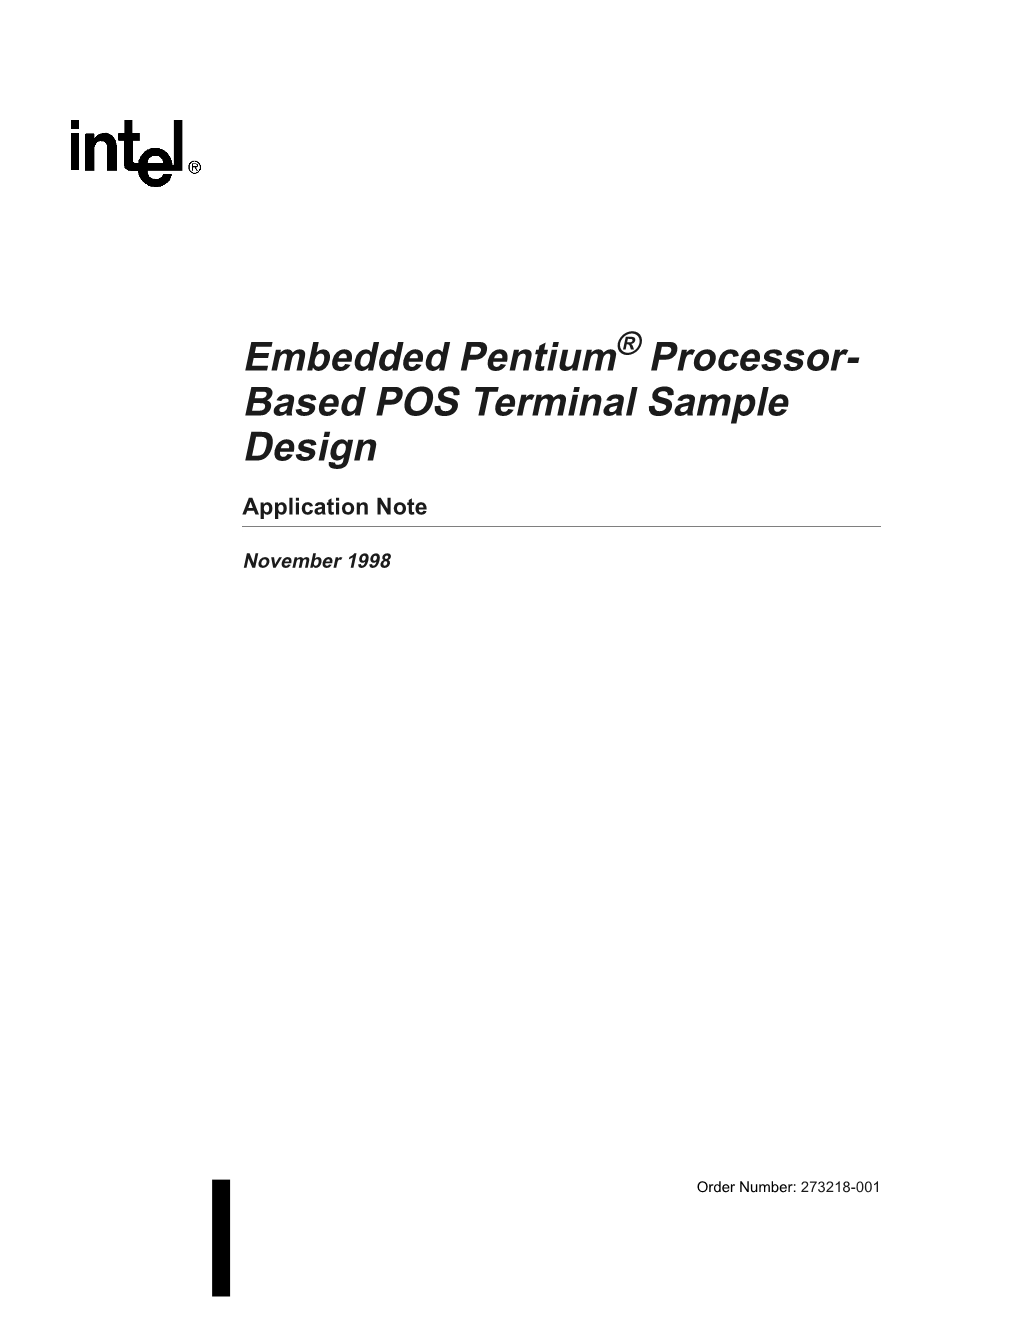 Embedded Pentium Processors